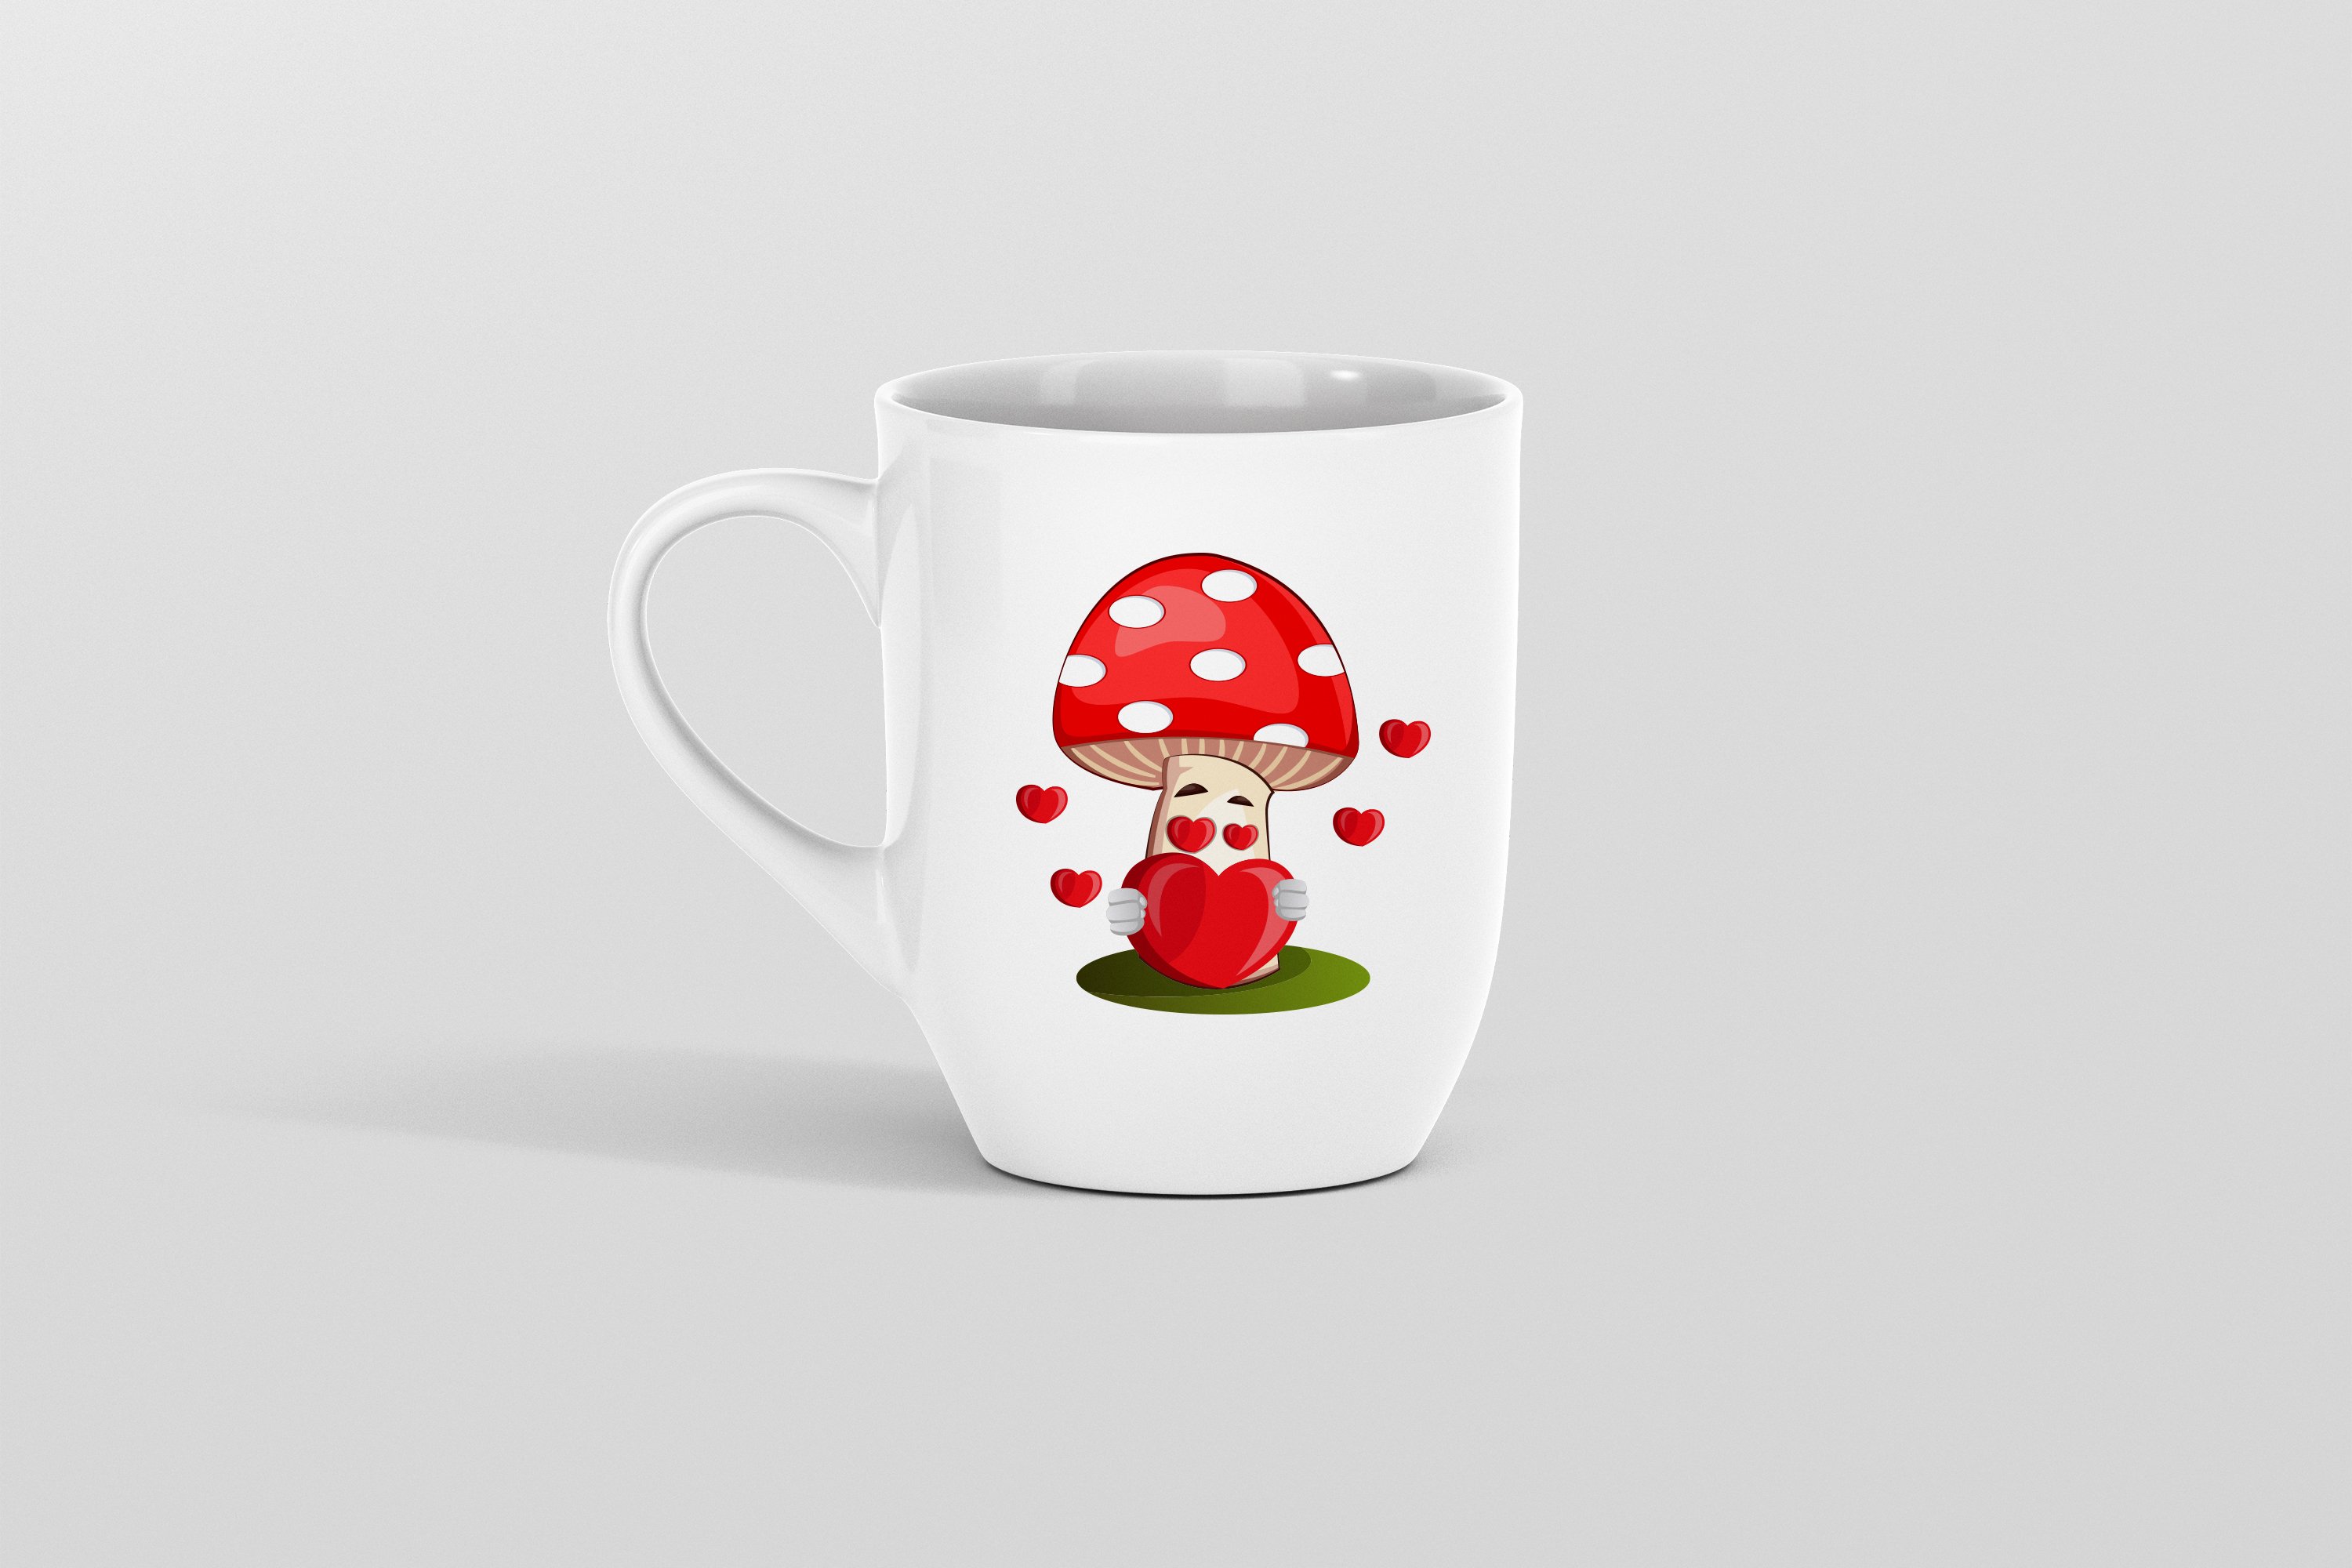 Big tea white cup in a minimalistic design with the mascot print.